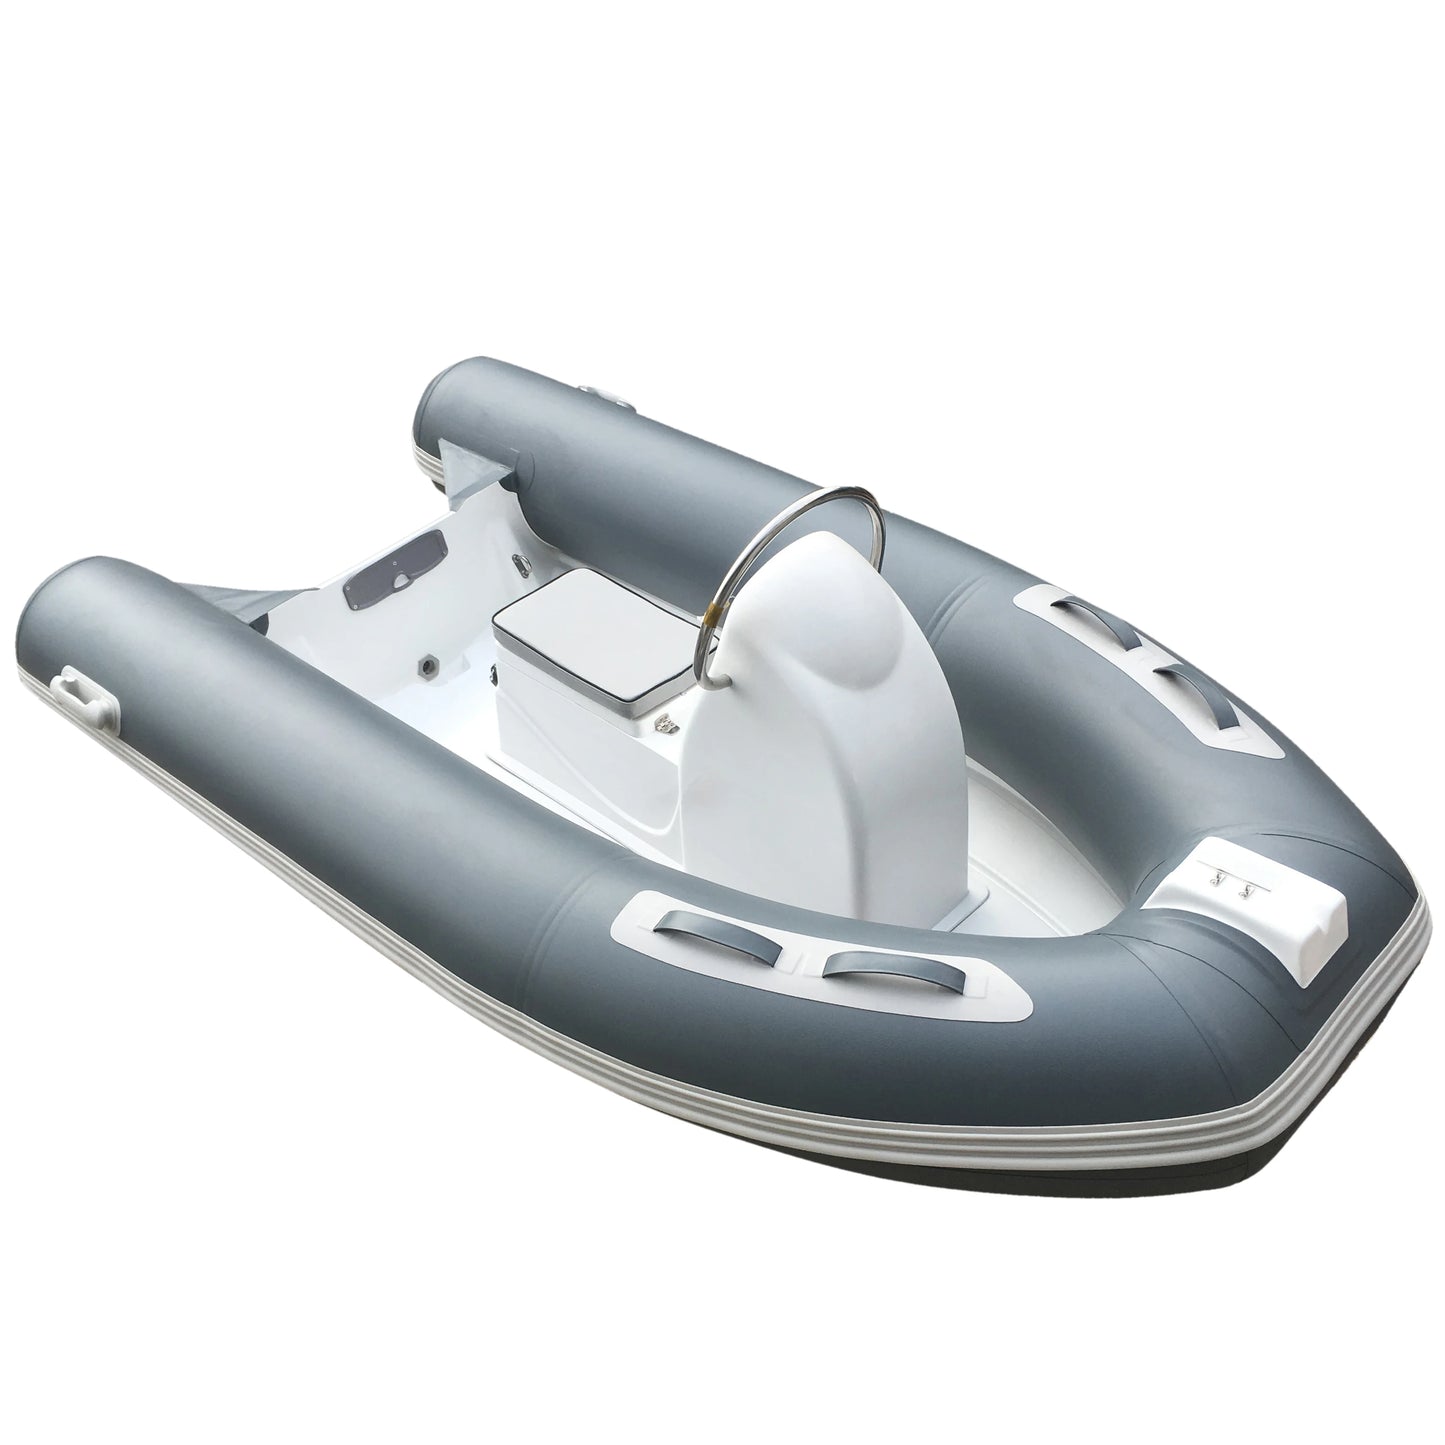 Goboat RIB300B RIB Inflatable Boat CE PVC Hypalon Luxury Multi-color Fiberglass With Fishing Accessories Carpfishing Equipment